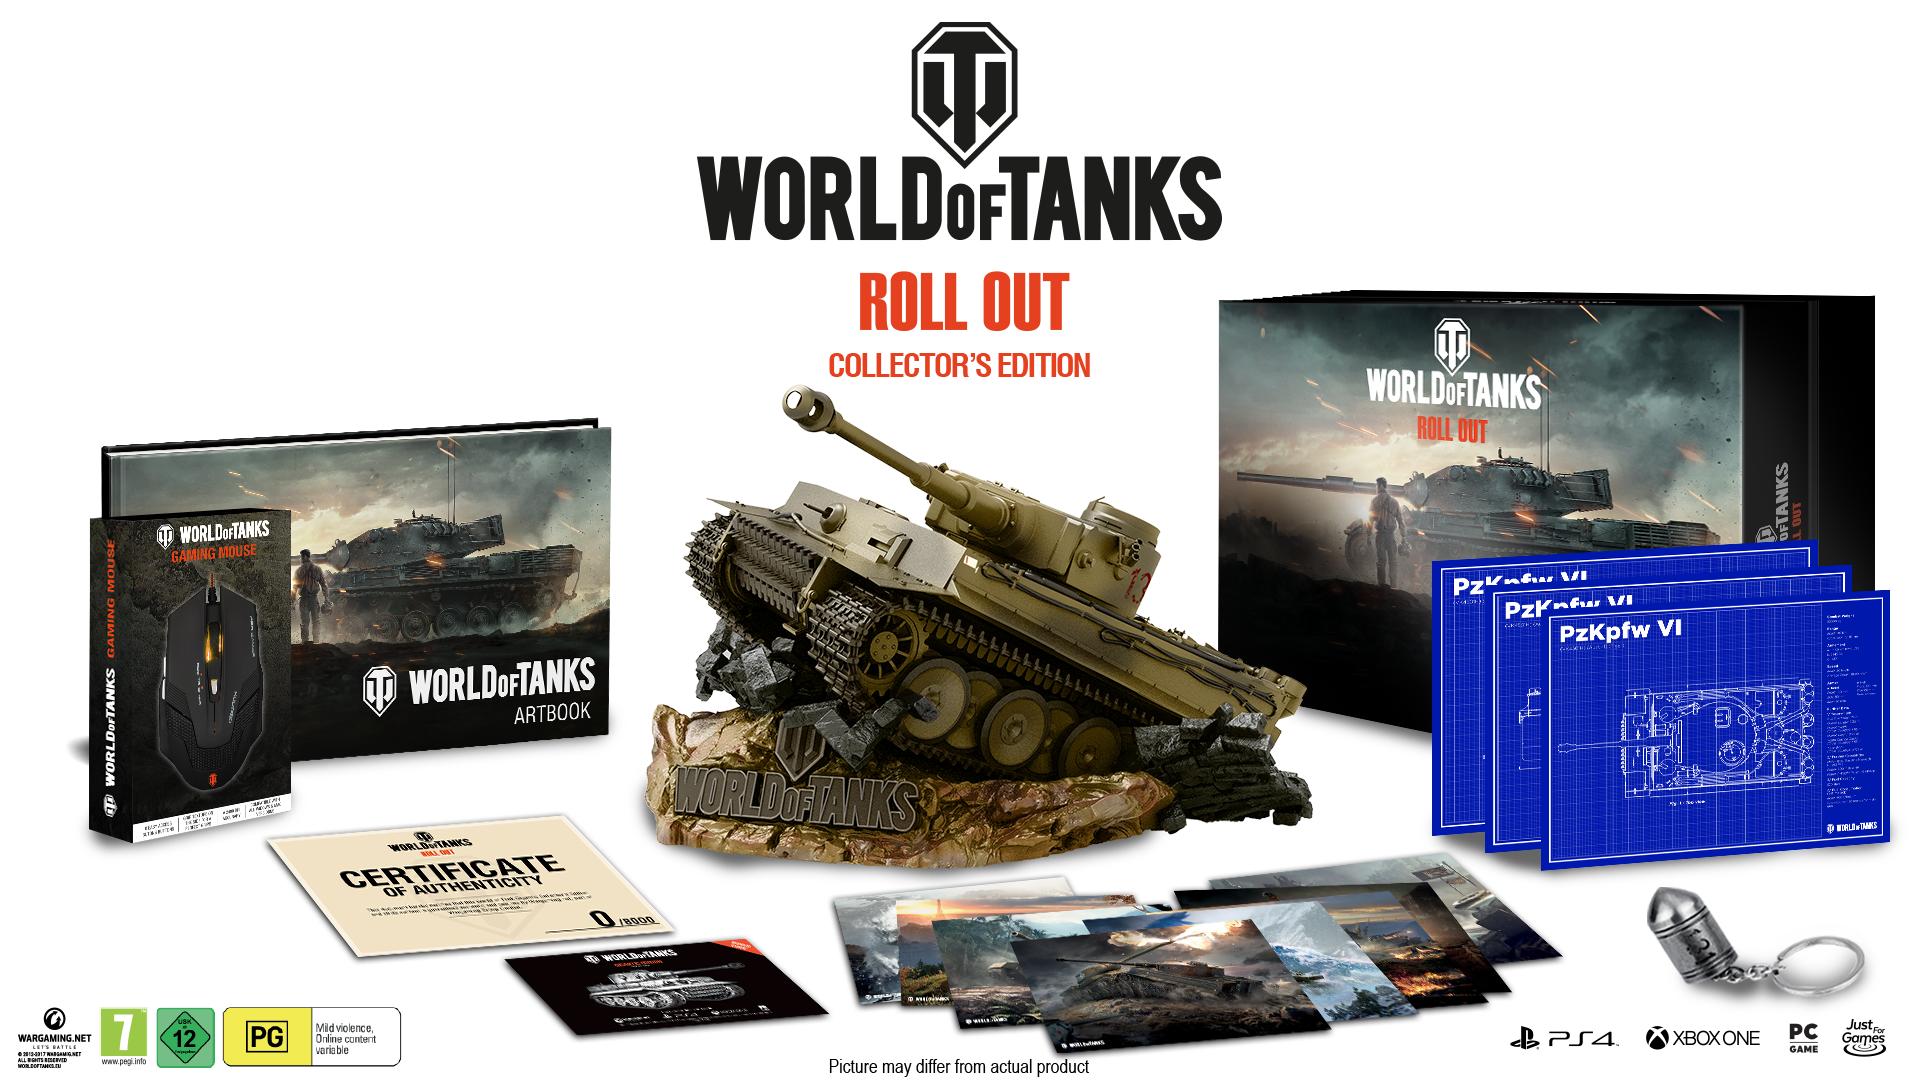 Коллекционный танк wot. Коллекционка World of Tanks. World of Tanks ролл аут. World of Tanks издание Roll out. World of Tanks Collector's Edition.